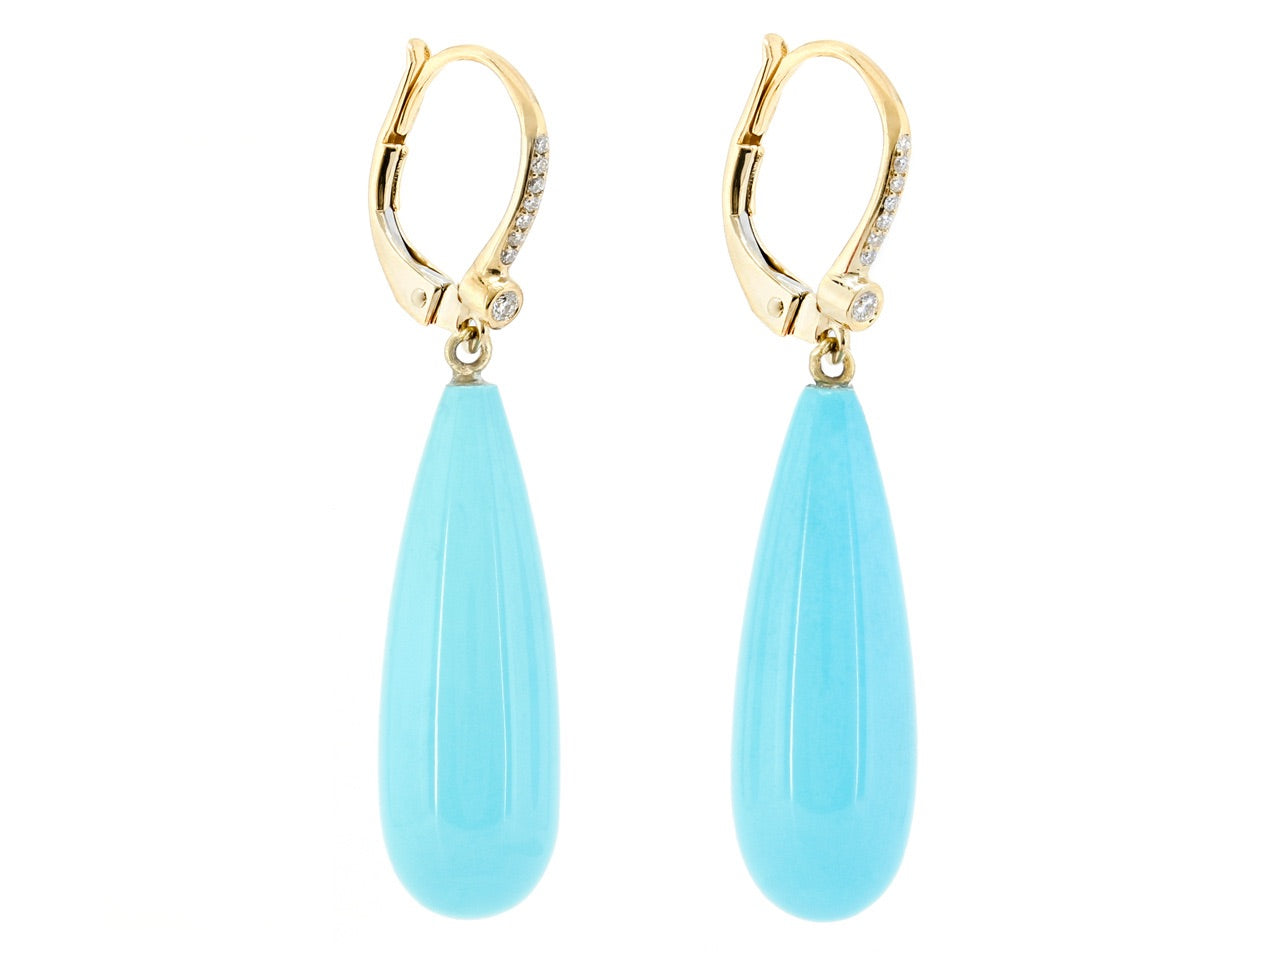 Beladora 'Bespoke' Turquoise and Diamond Dangle Earrings in 18K Gold